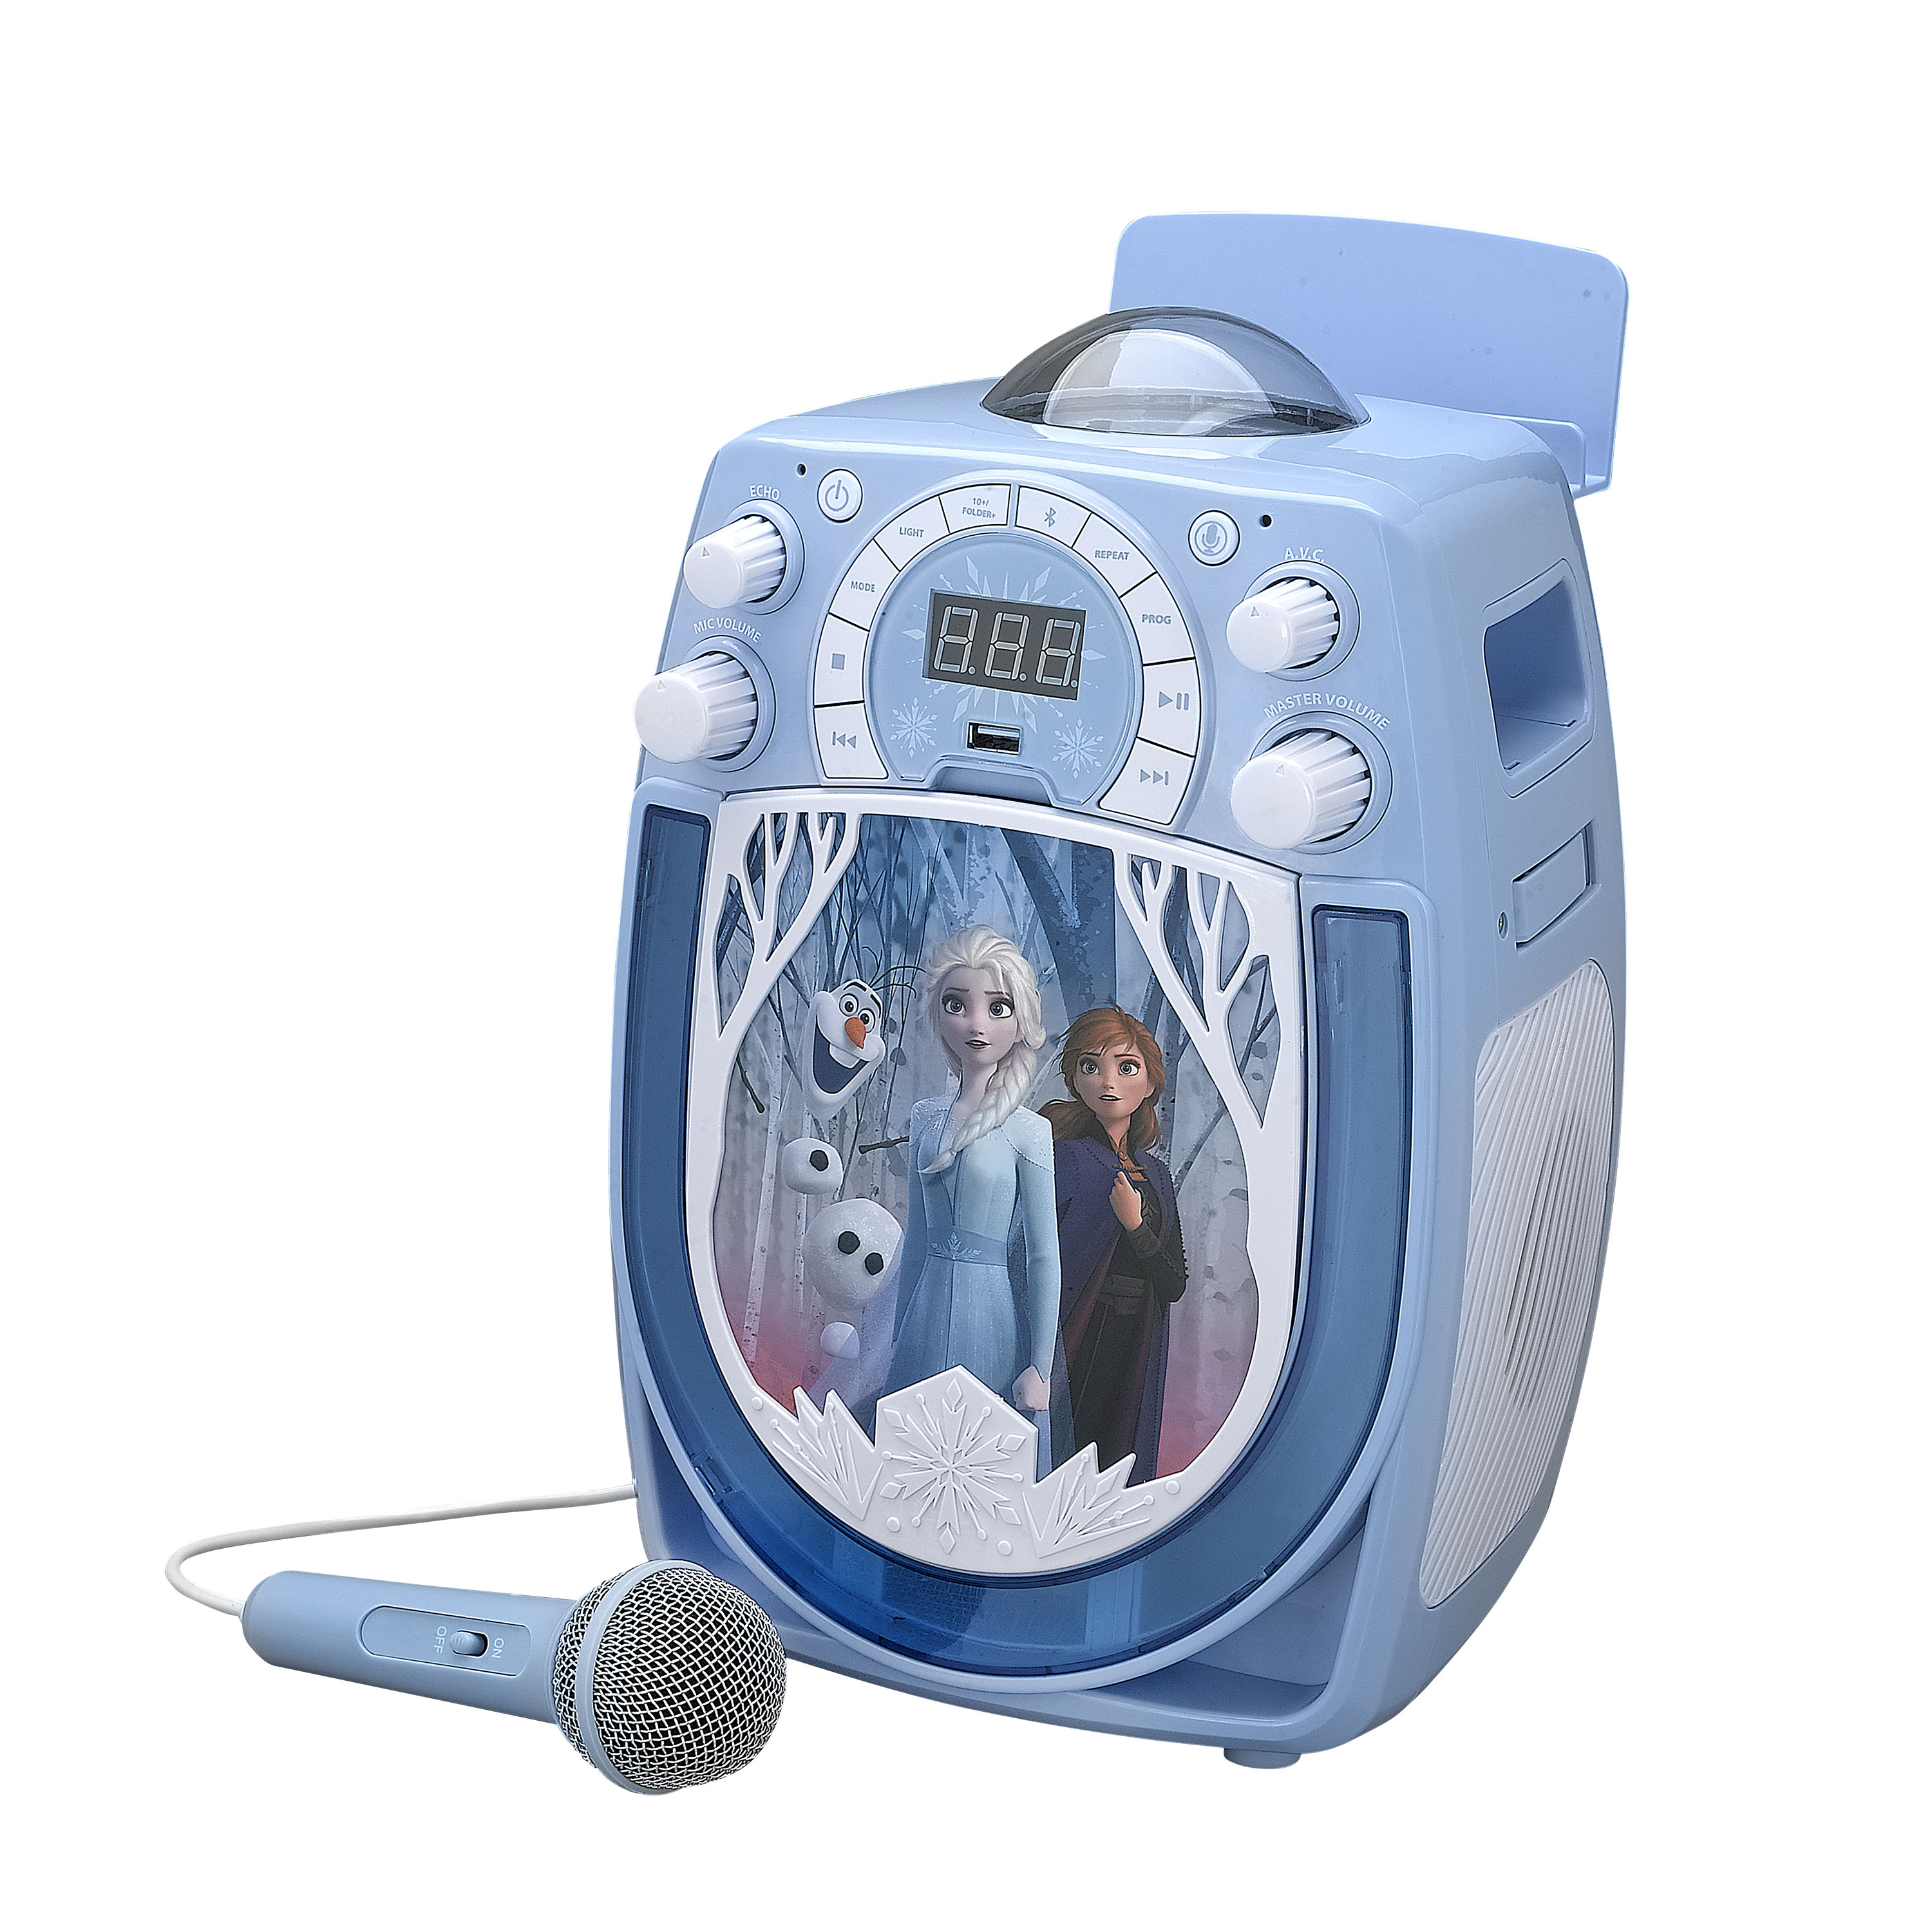 Frozen - Disney Frozen II Karaoke with Snowflake Projector and Microphone (cd+g) - image 2 of 6